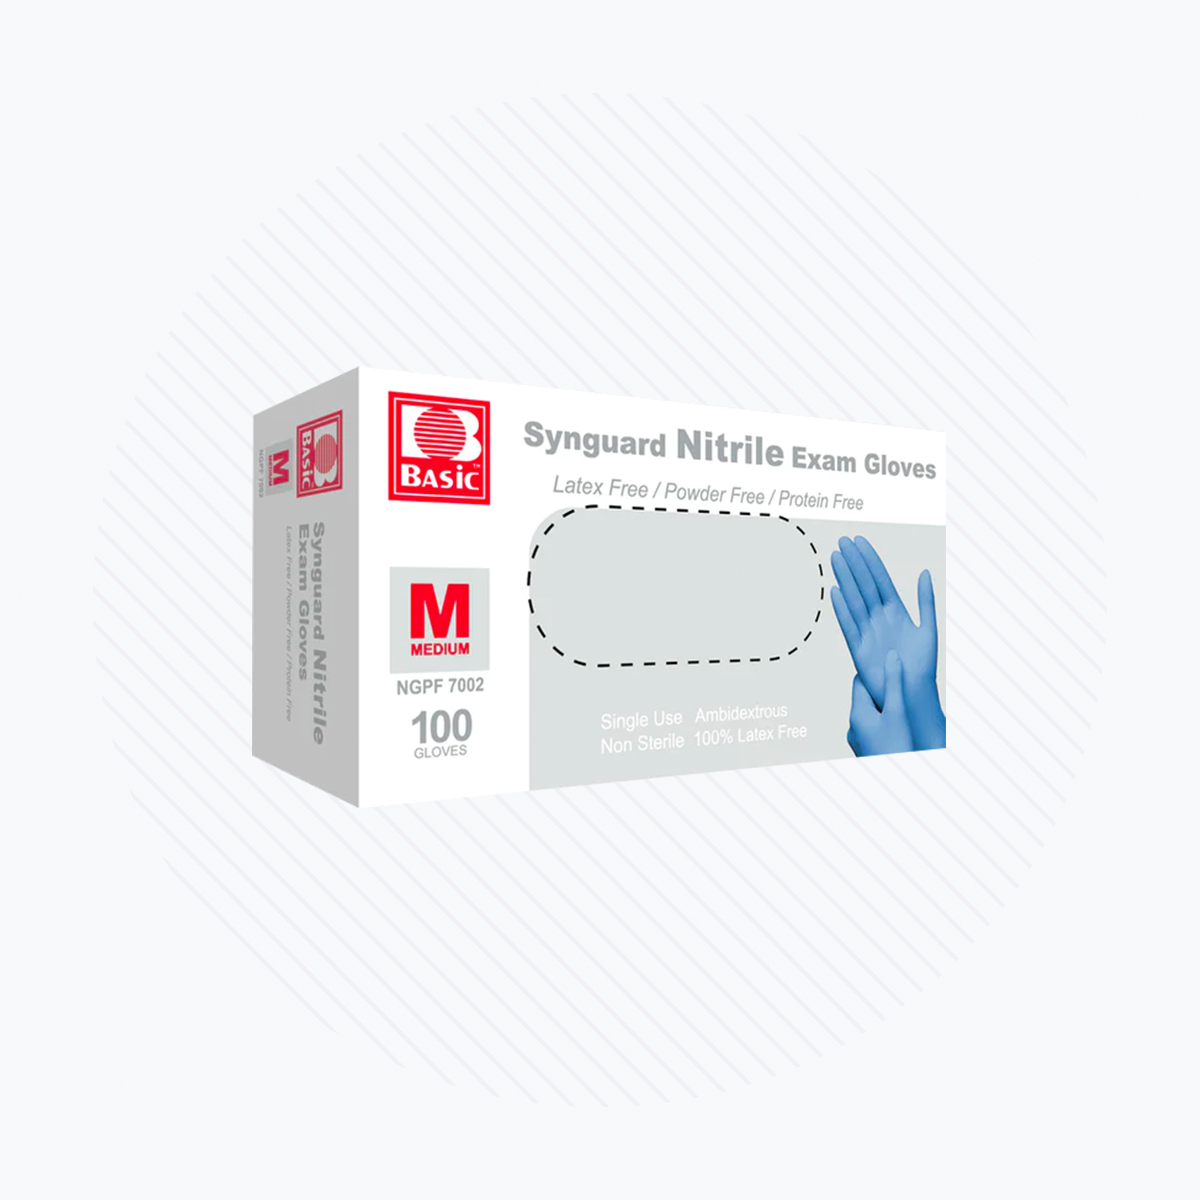 Synguard Medical Blue Nitrile Exam Gloves - Latex-Free & Powder-Free 100-pack (Medium)